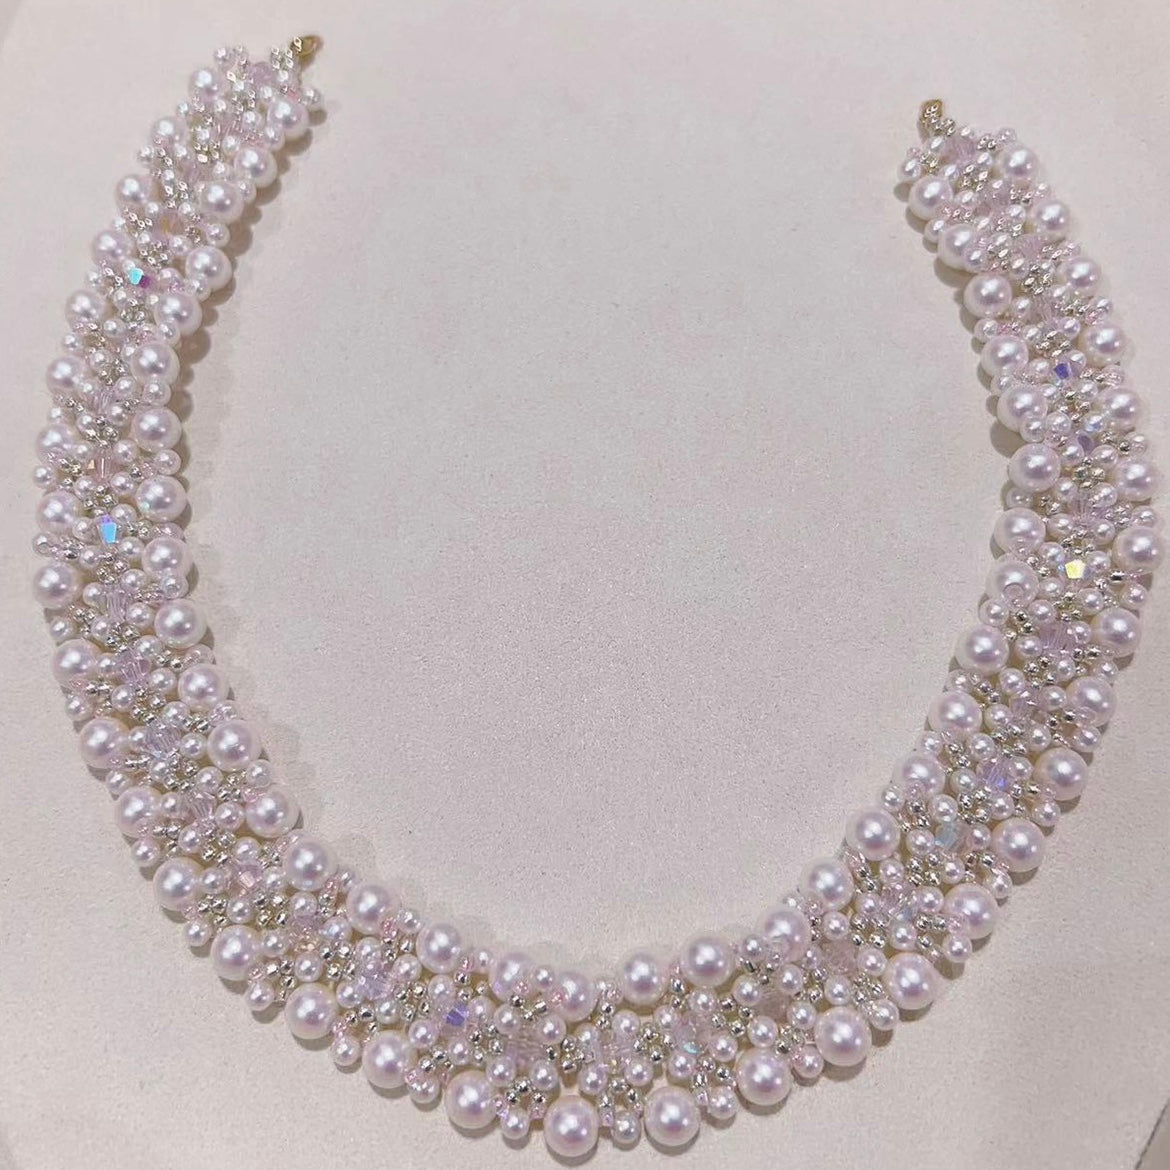 Andromeda's blingbling beaded necklace handmade jewelry choker fashion item